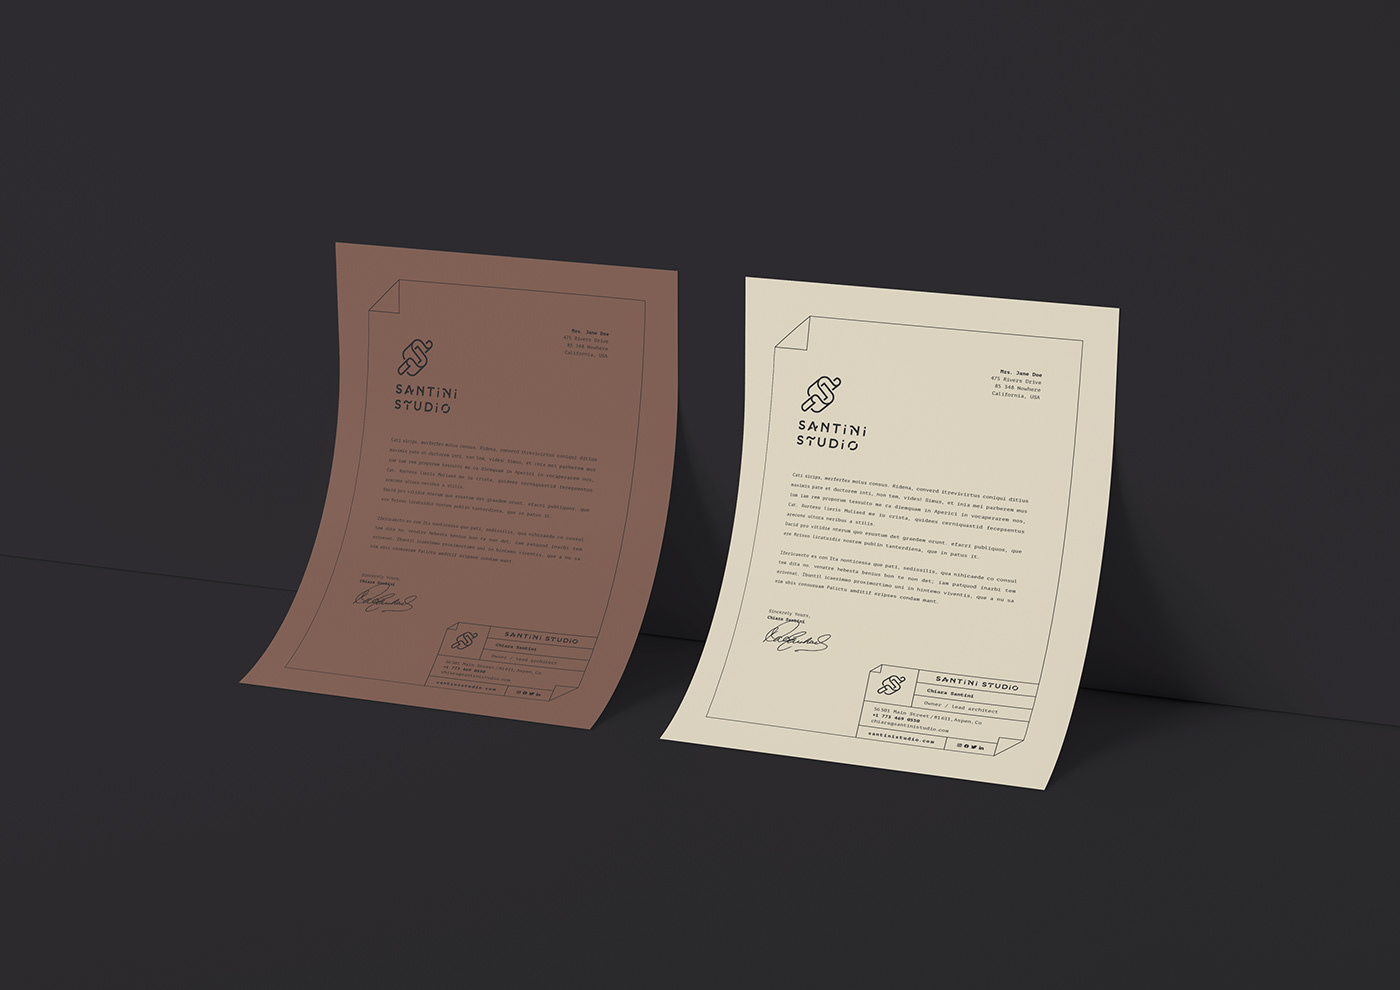 Letterheads design and colored paper for Santini Studio's new brand identity